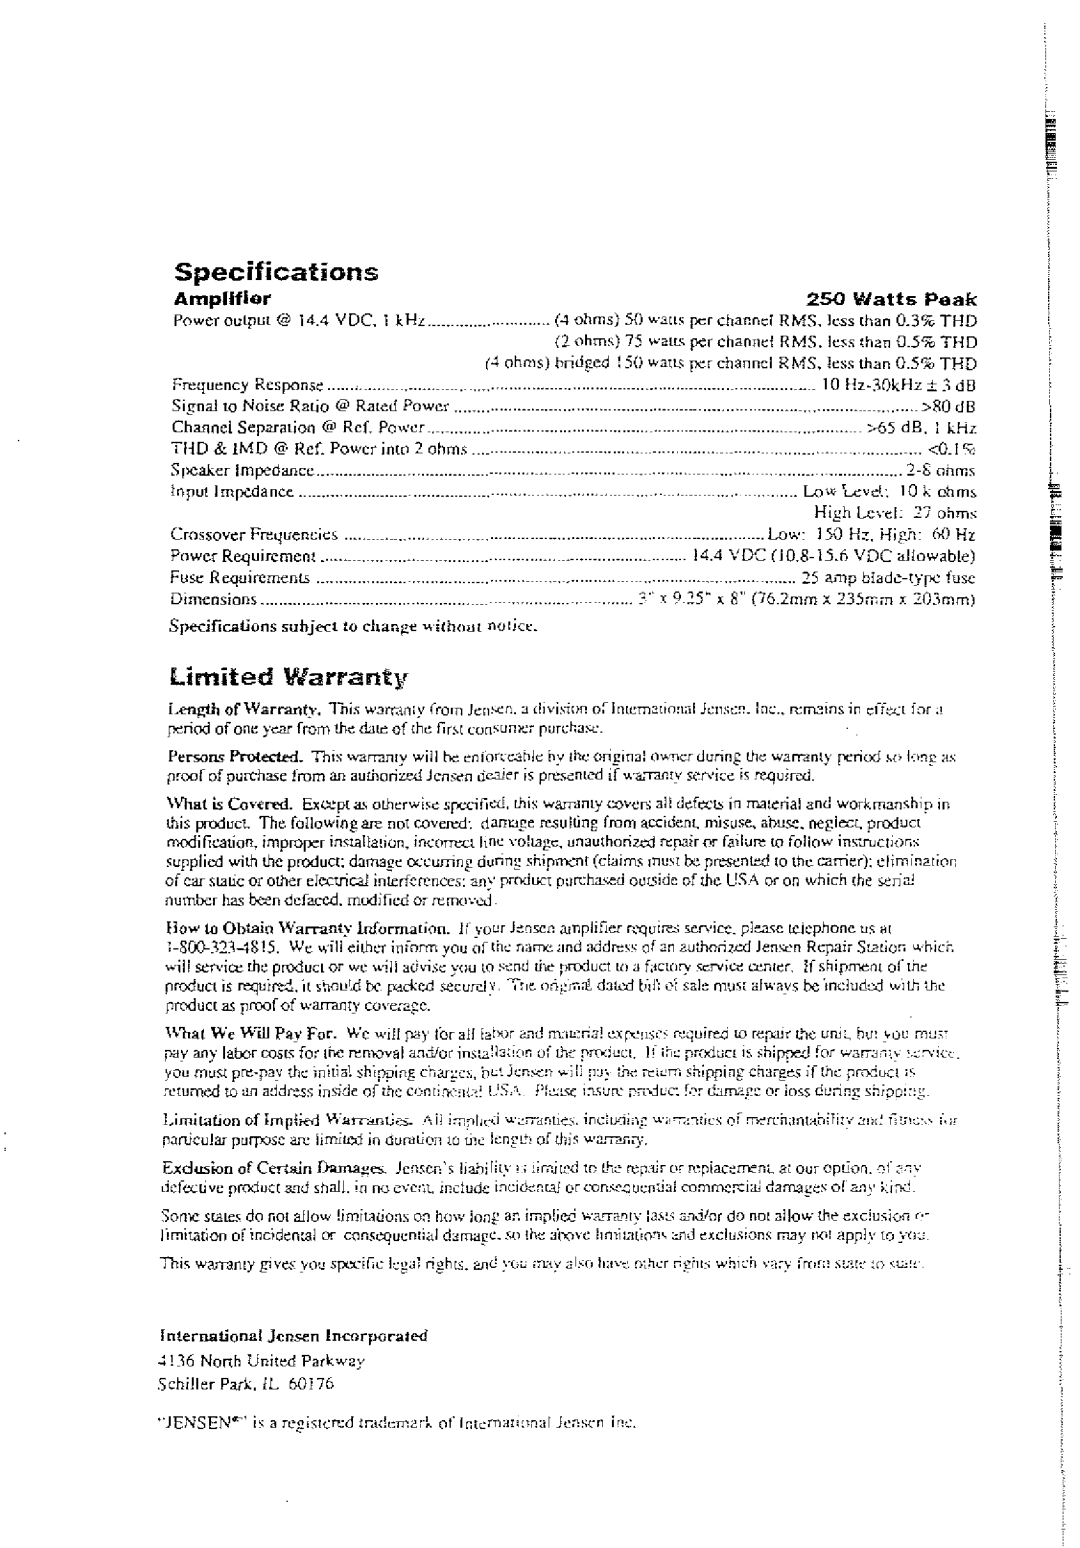 Jensen A222HLX owner manual Specifications, limited Warrant, Amplifier, Watts Peak, S ohms 